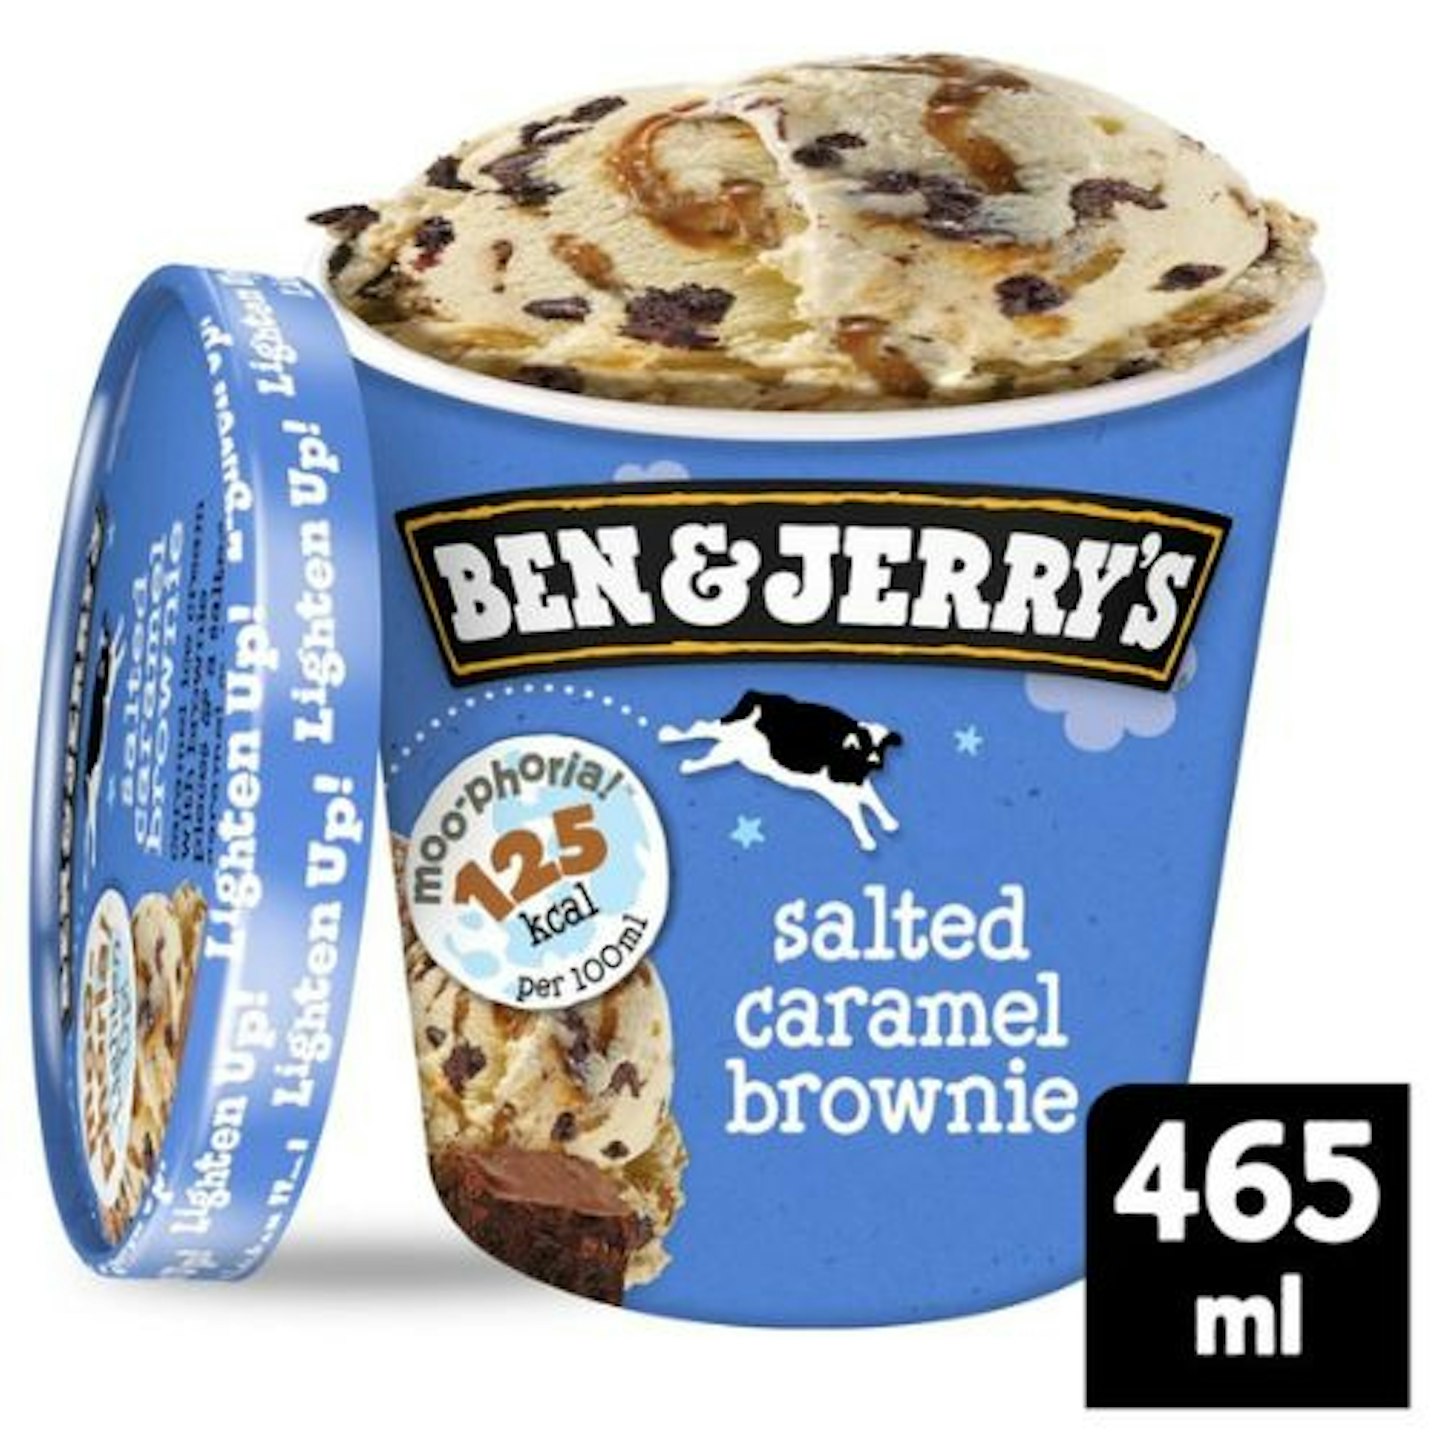 Ben + Jerry's Salted Caramel Brownie Ice Cream Moophoria 465ml